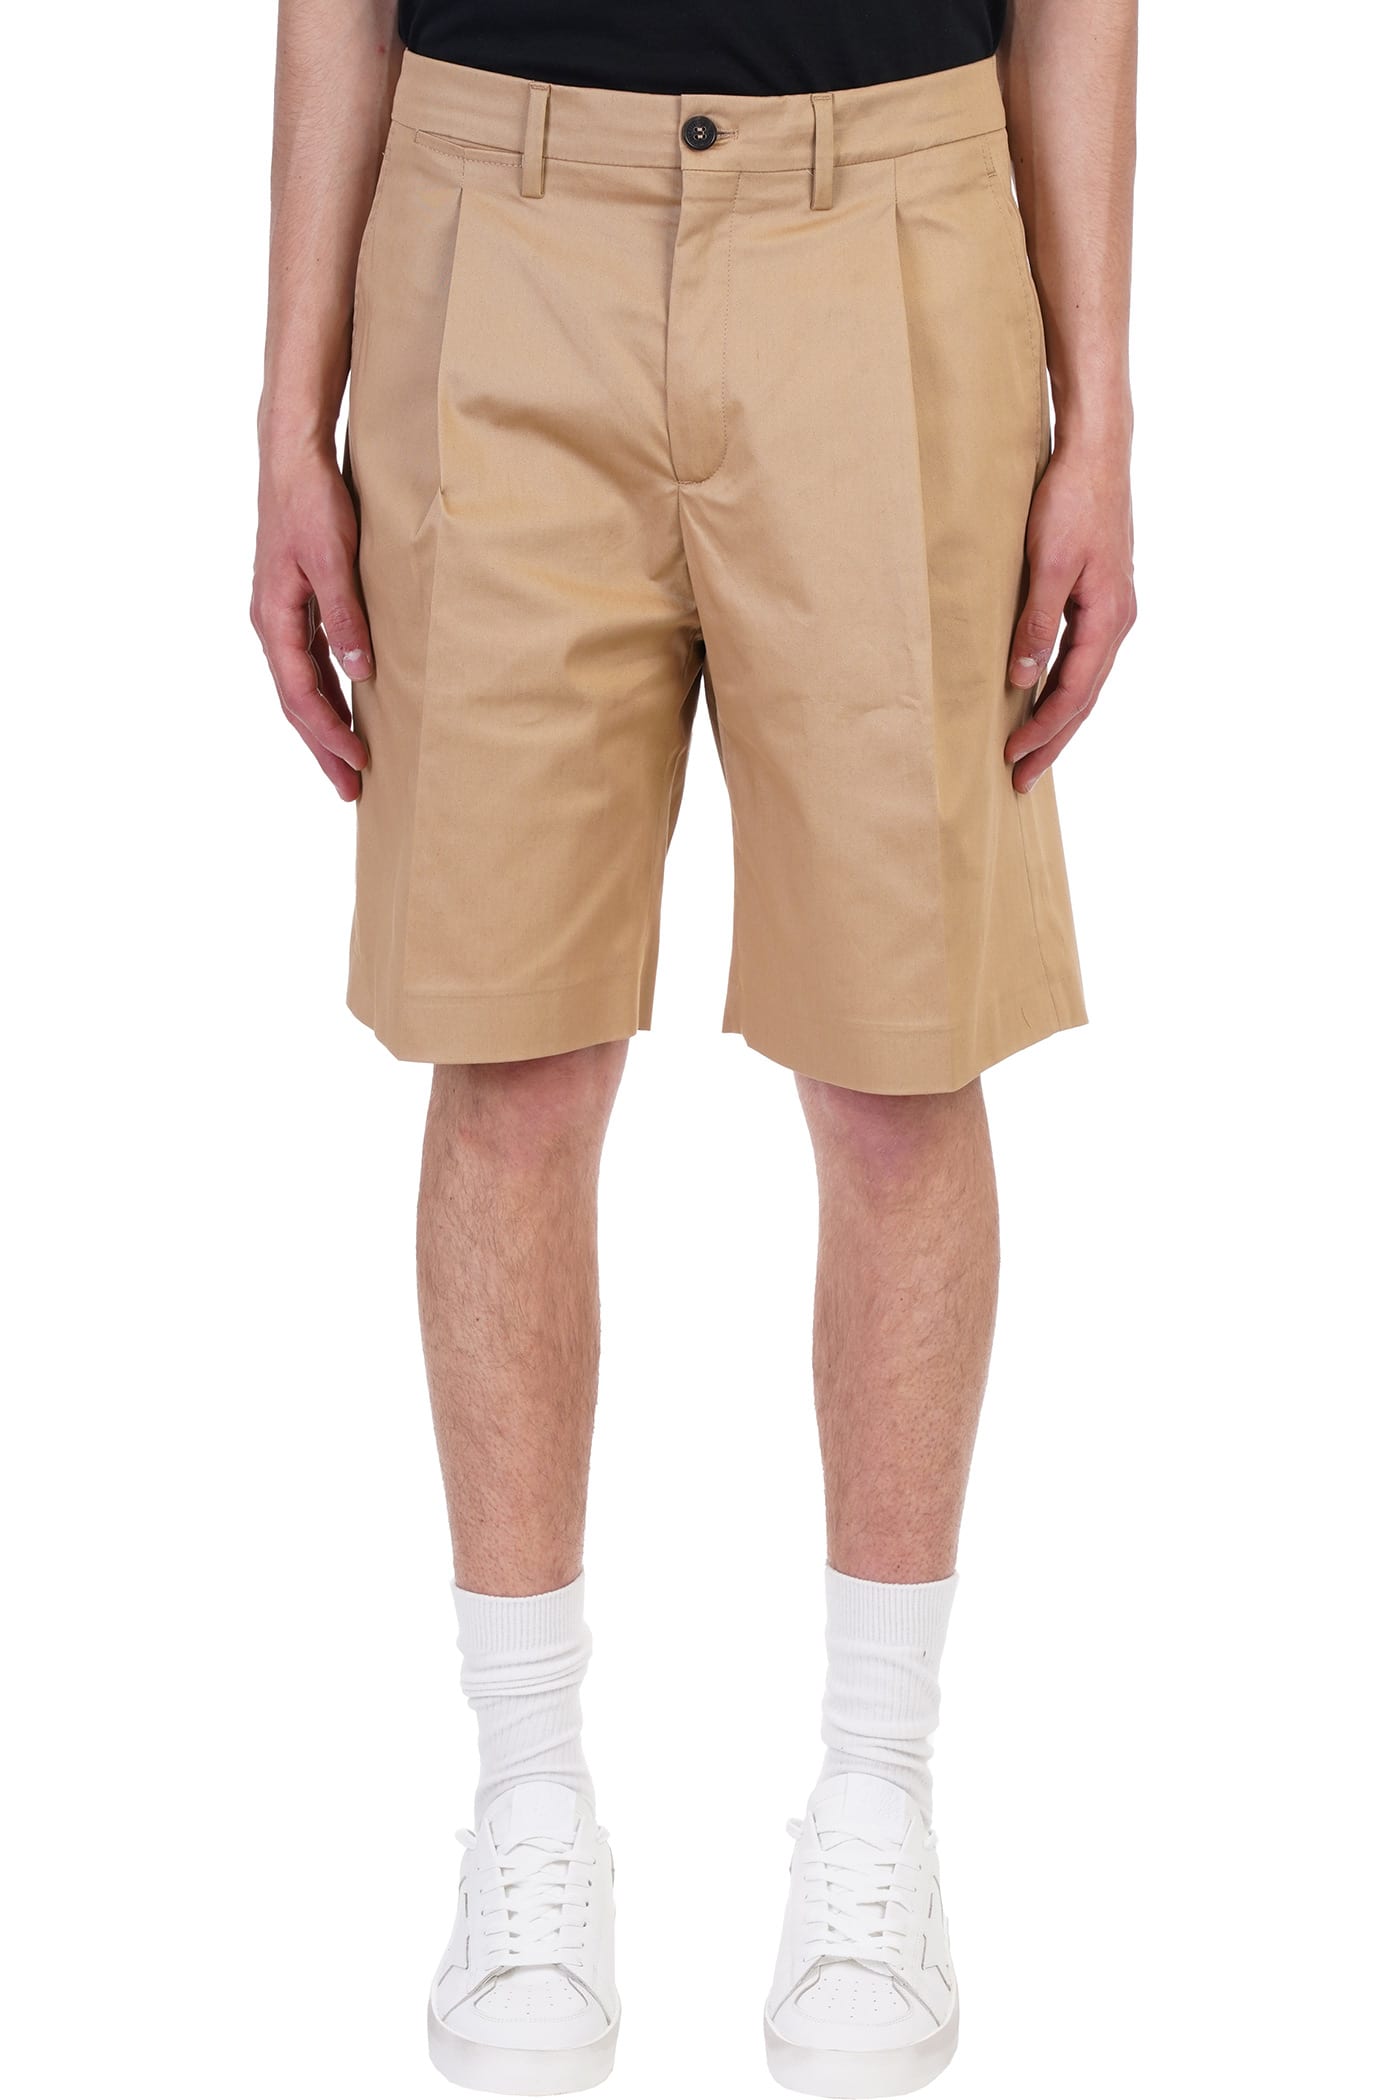 Golden Goose Golden M S Shorts In Beige Cotton